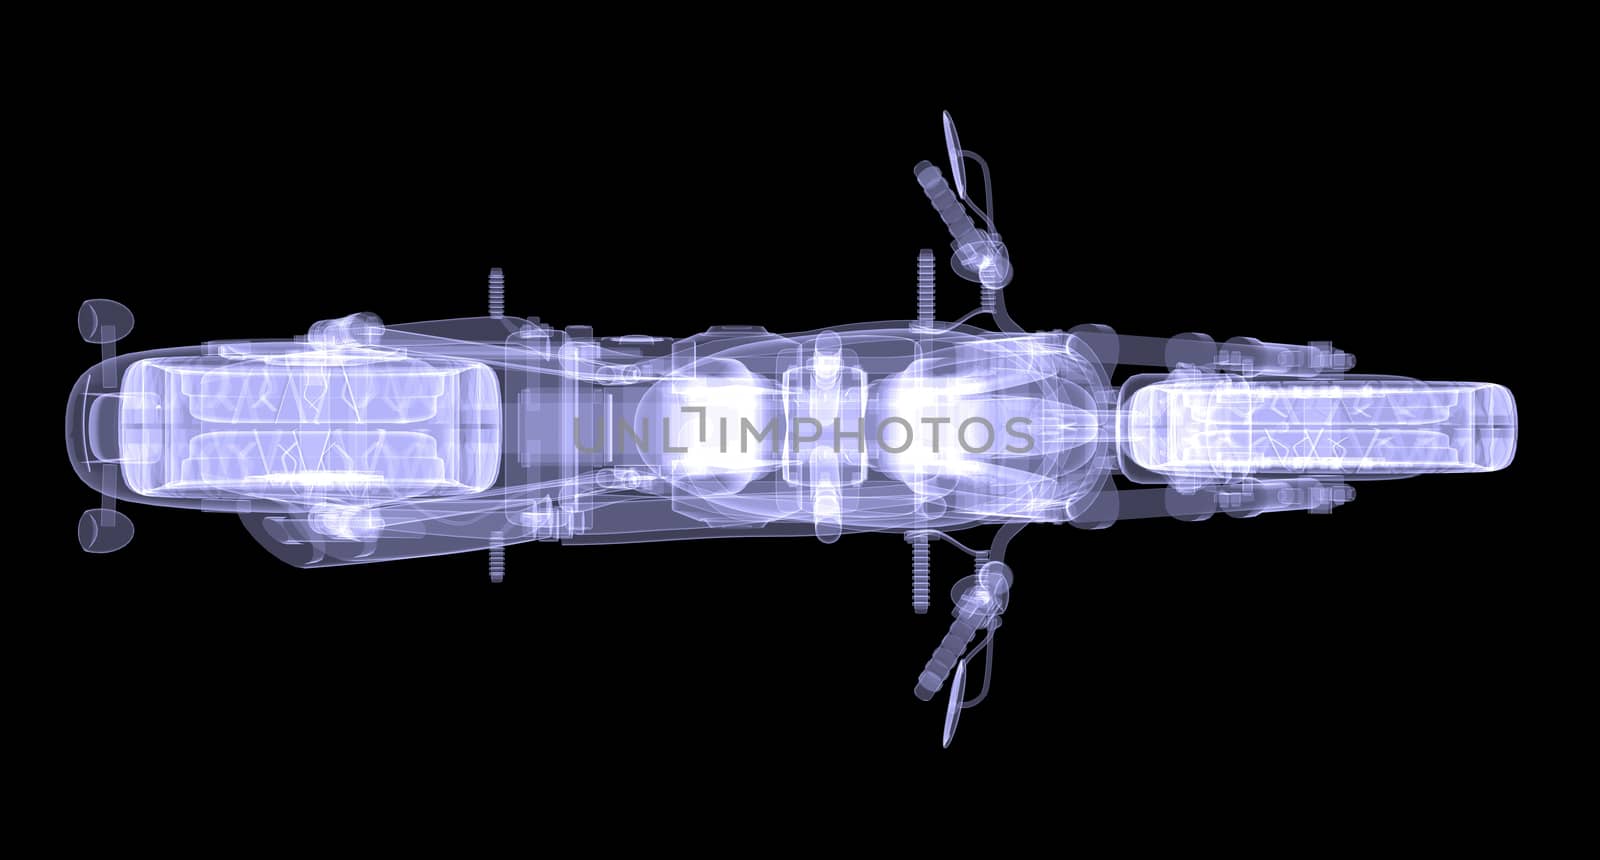 Chopper. The X-ray render by cherezoff